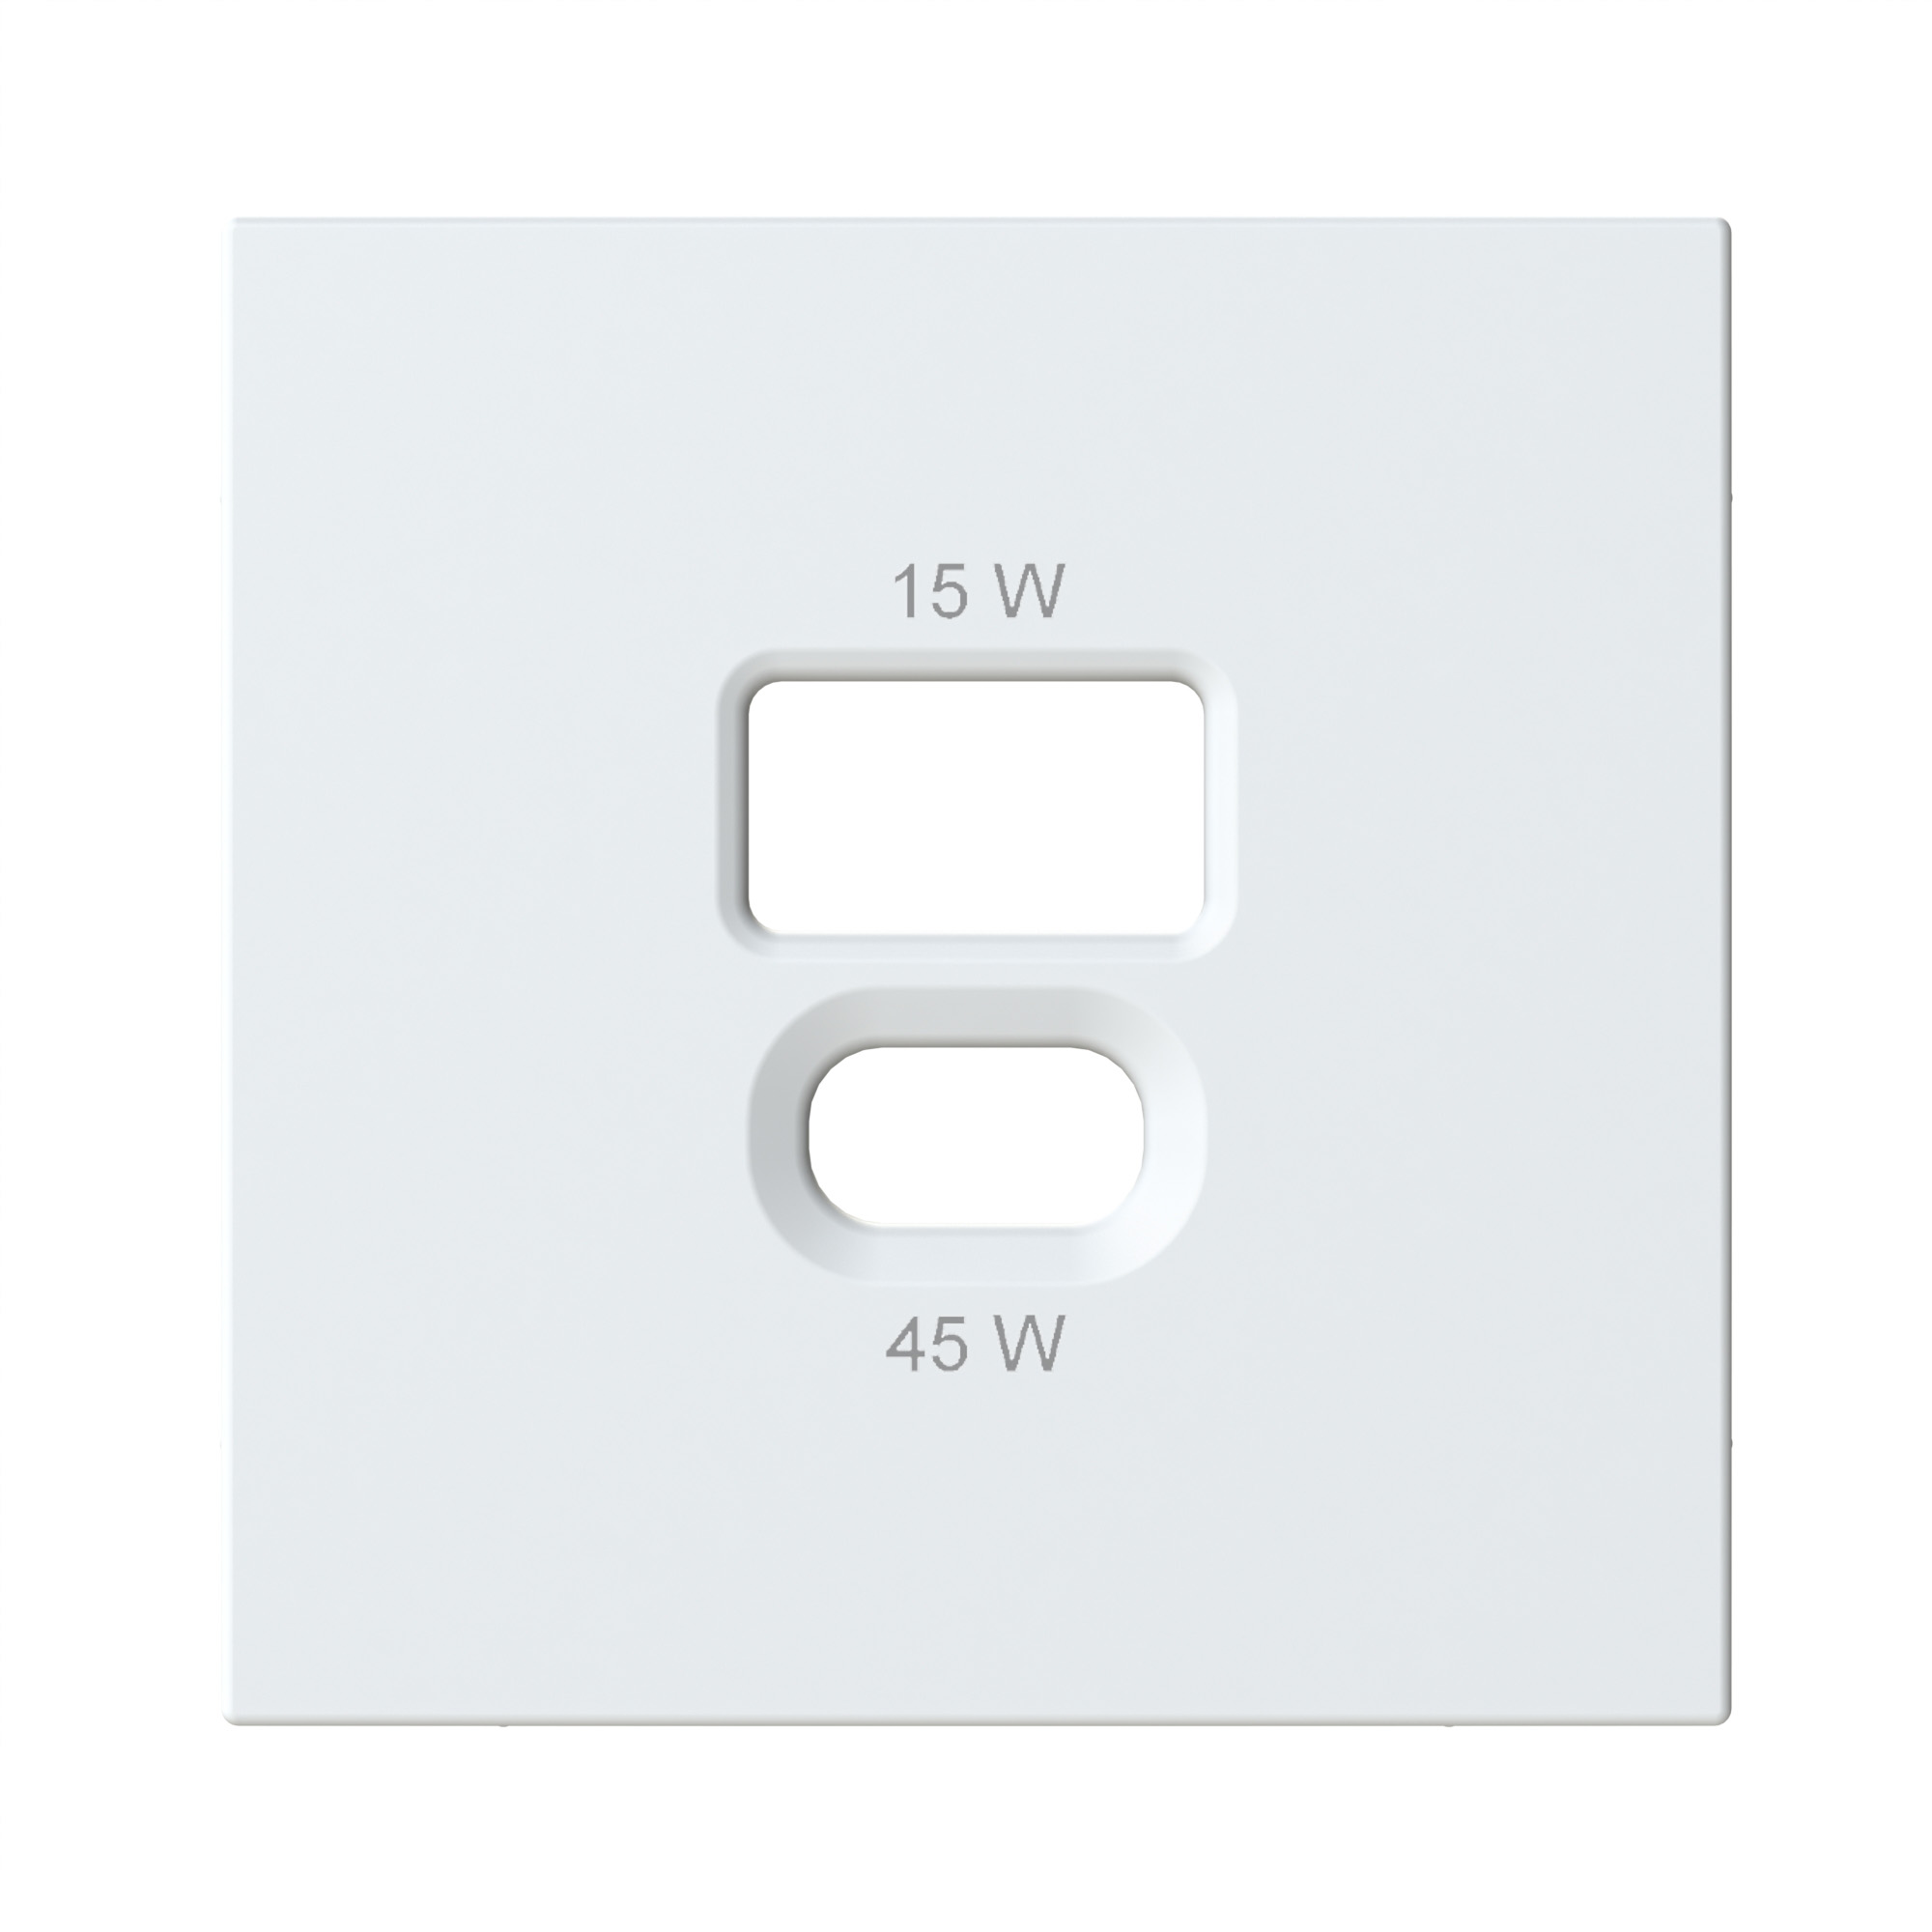 OPUS 55 Abdeckplatte für USB-A/C Steckdose, 45 W, 15 W, polarweiß-seidenmatt